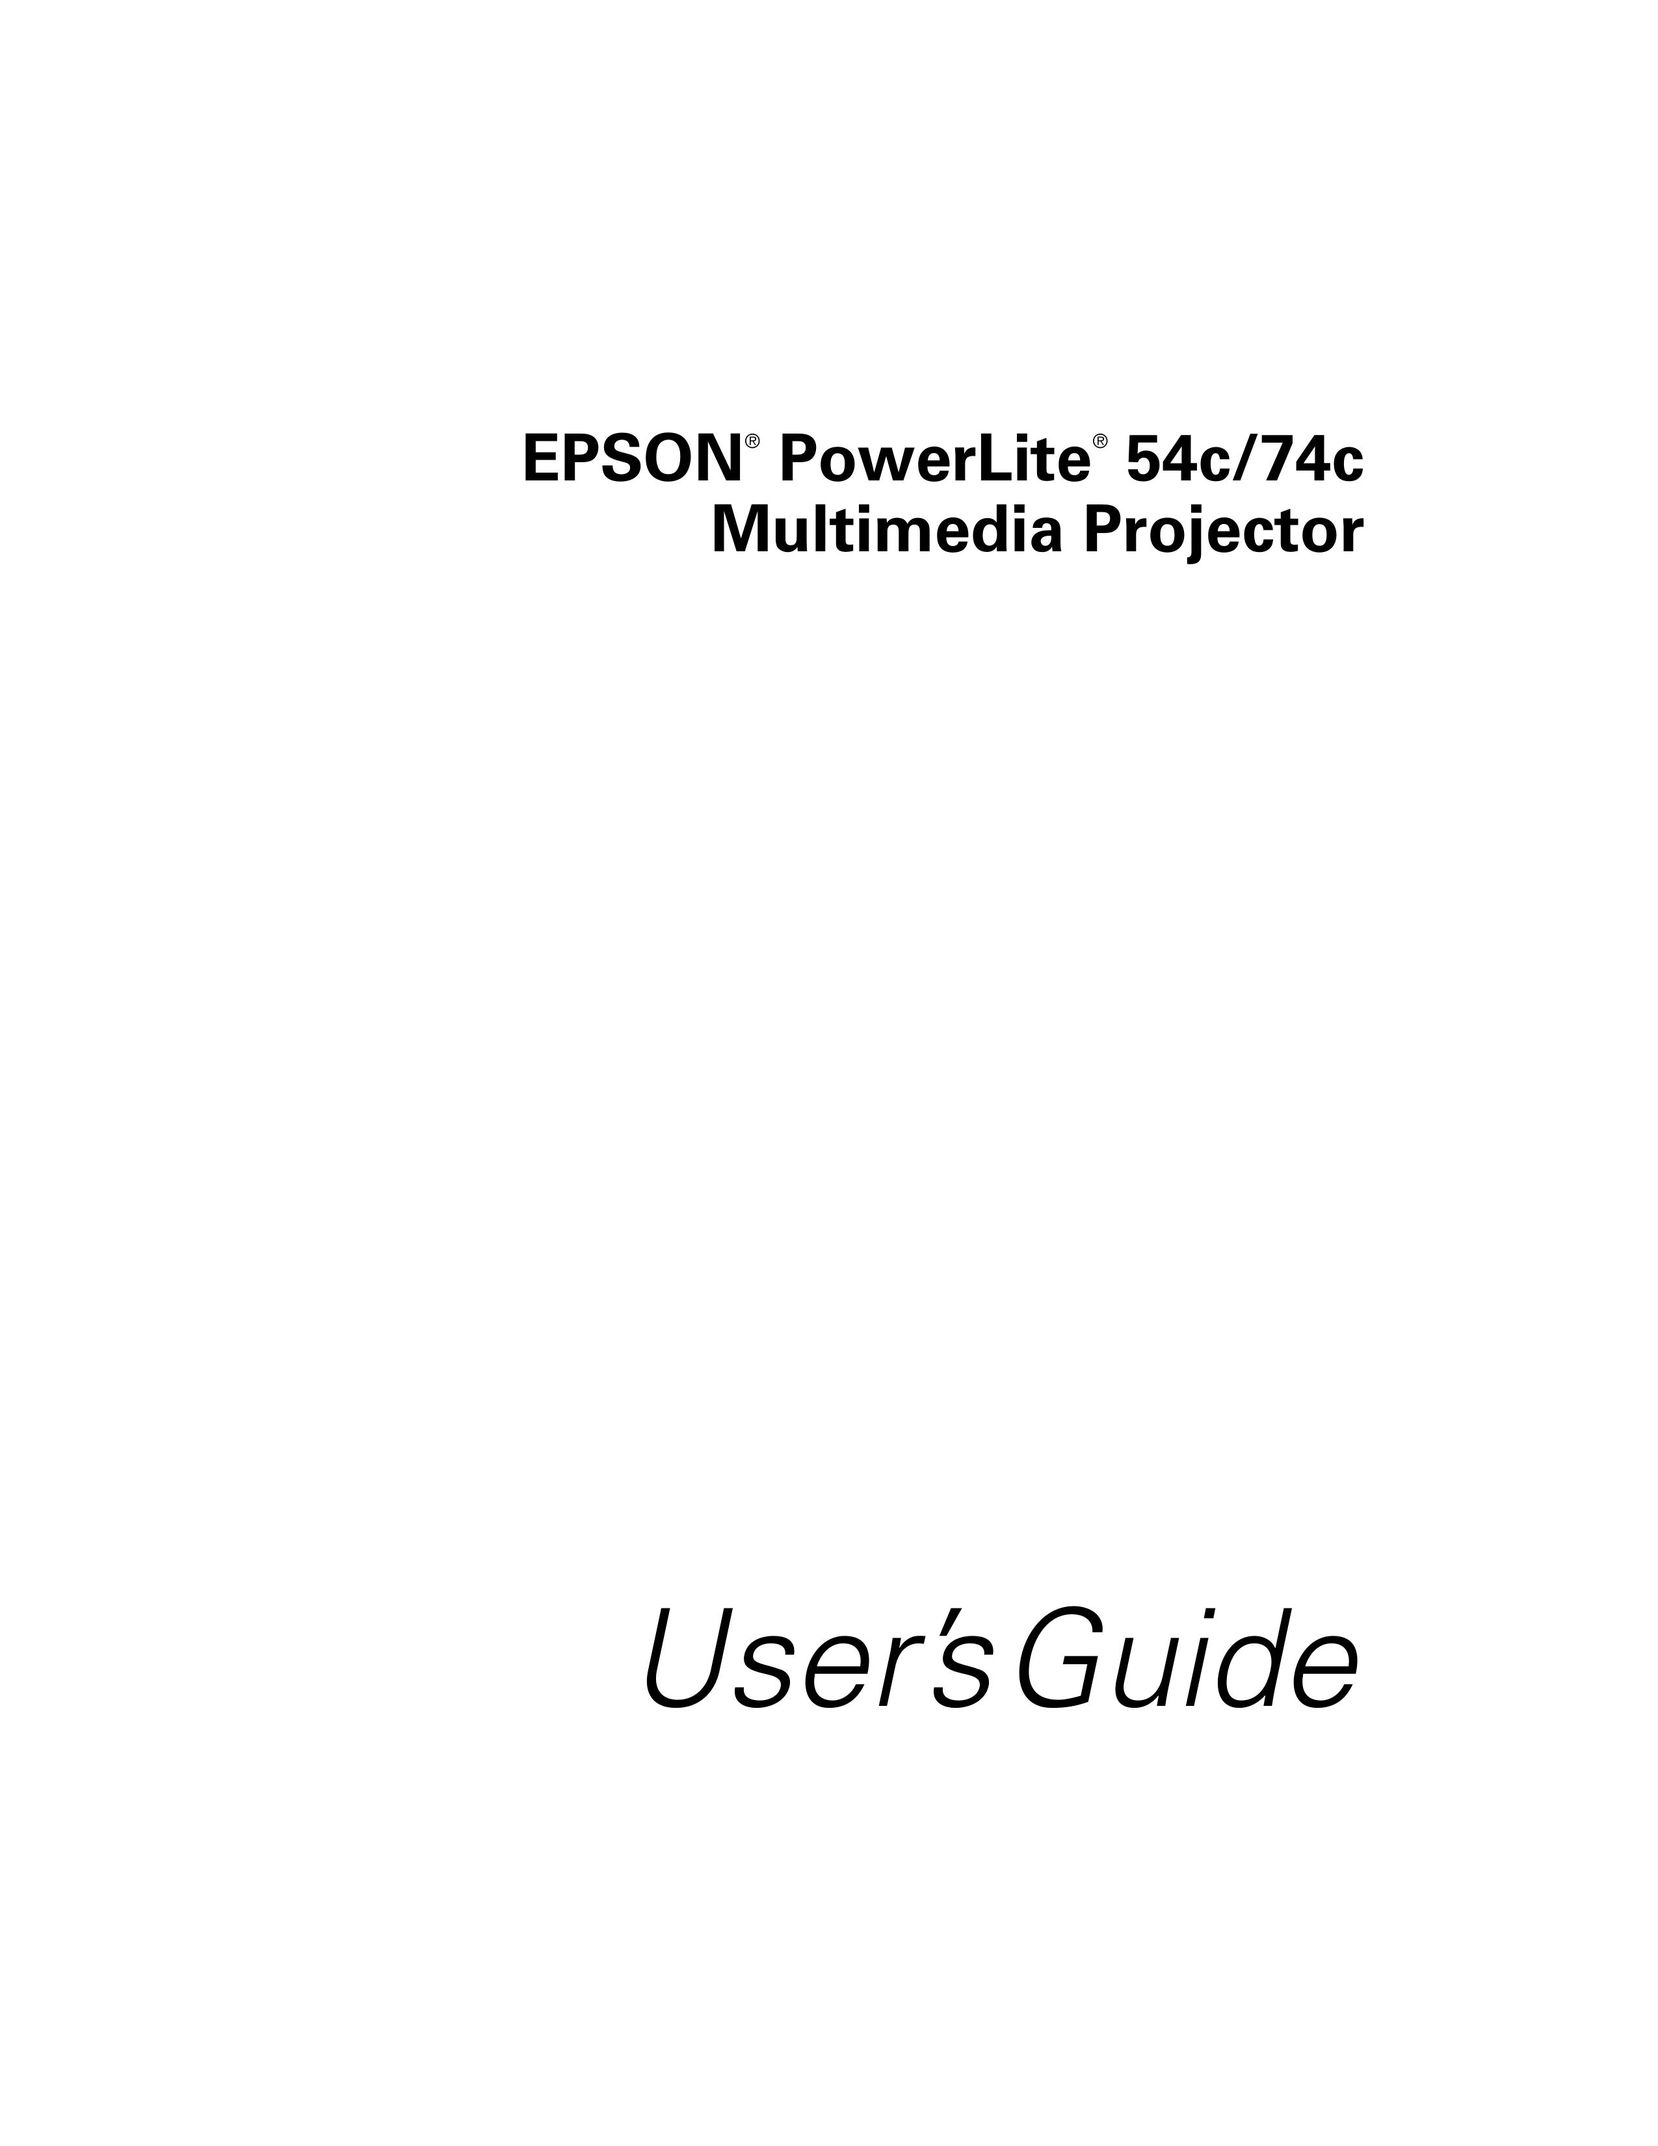 Garmin 74C Projector User Manual